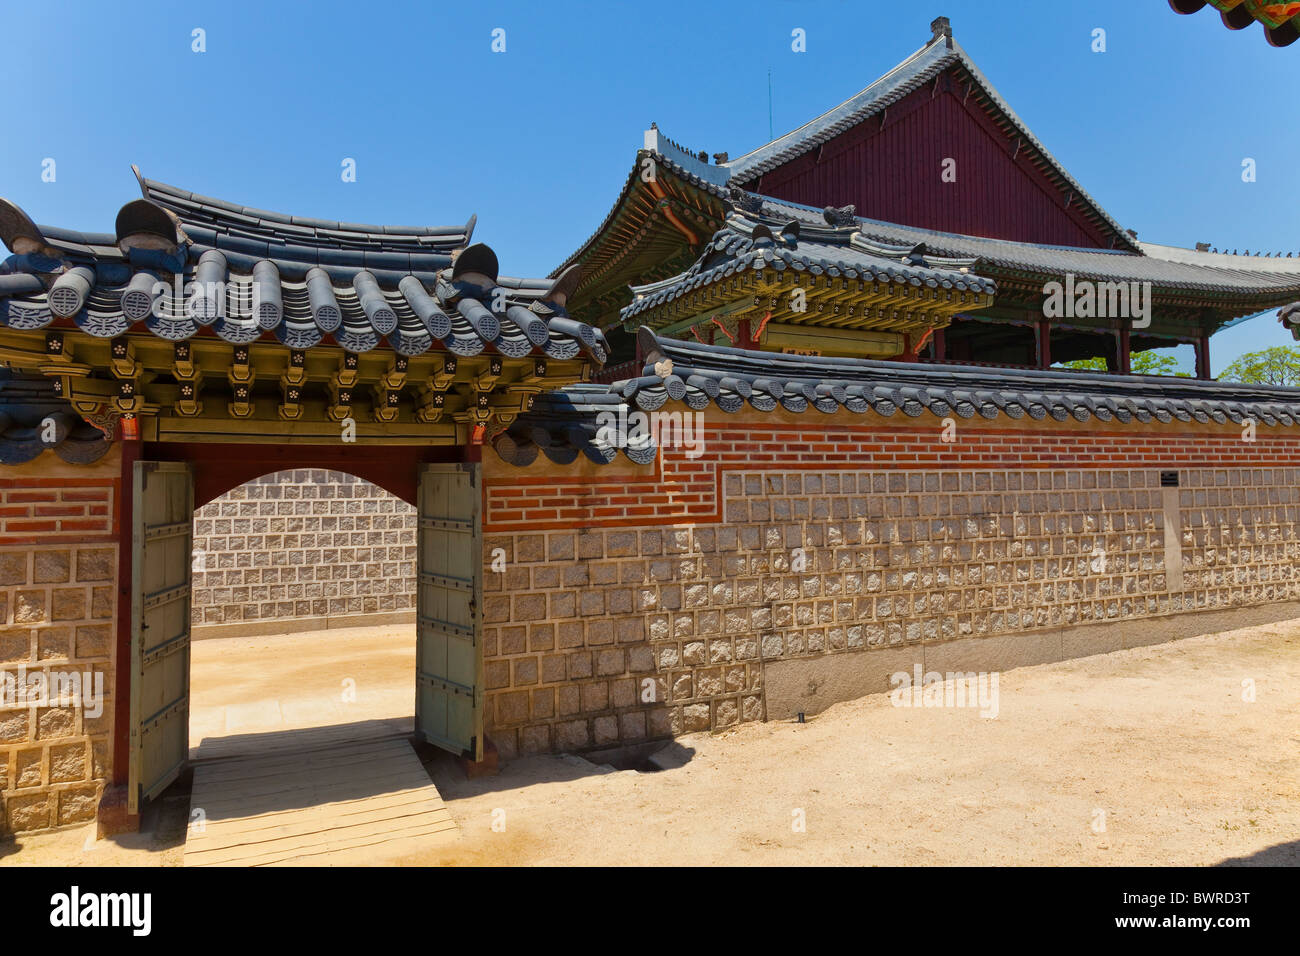 Gyeongbokgung Palace Seoul South Korea. JMH3921 Stock Photo